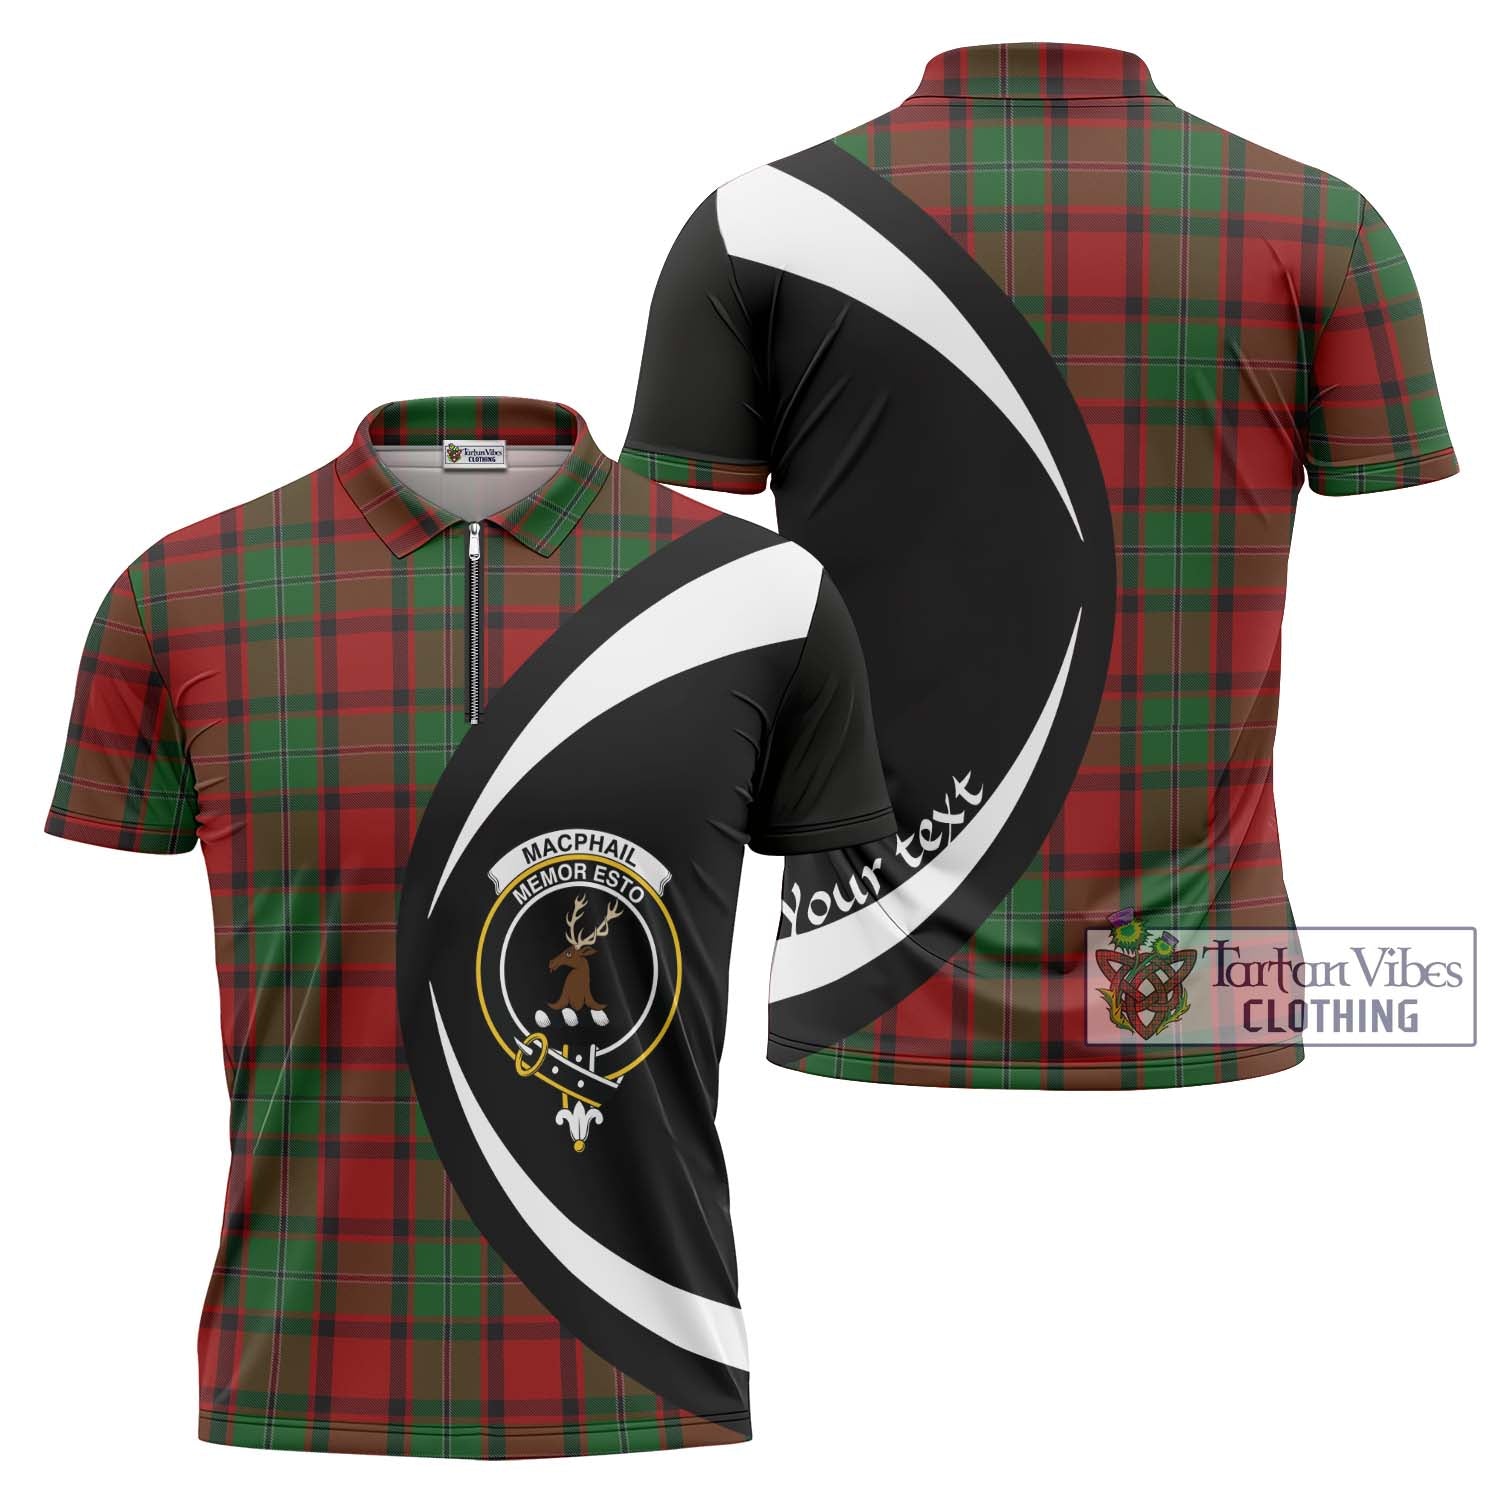 Tartan Vibes Clothing MacPhail Tartan Zipper Polo Shirt with Family Crest Circle Style